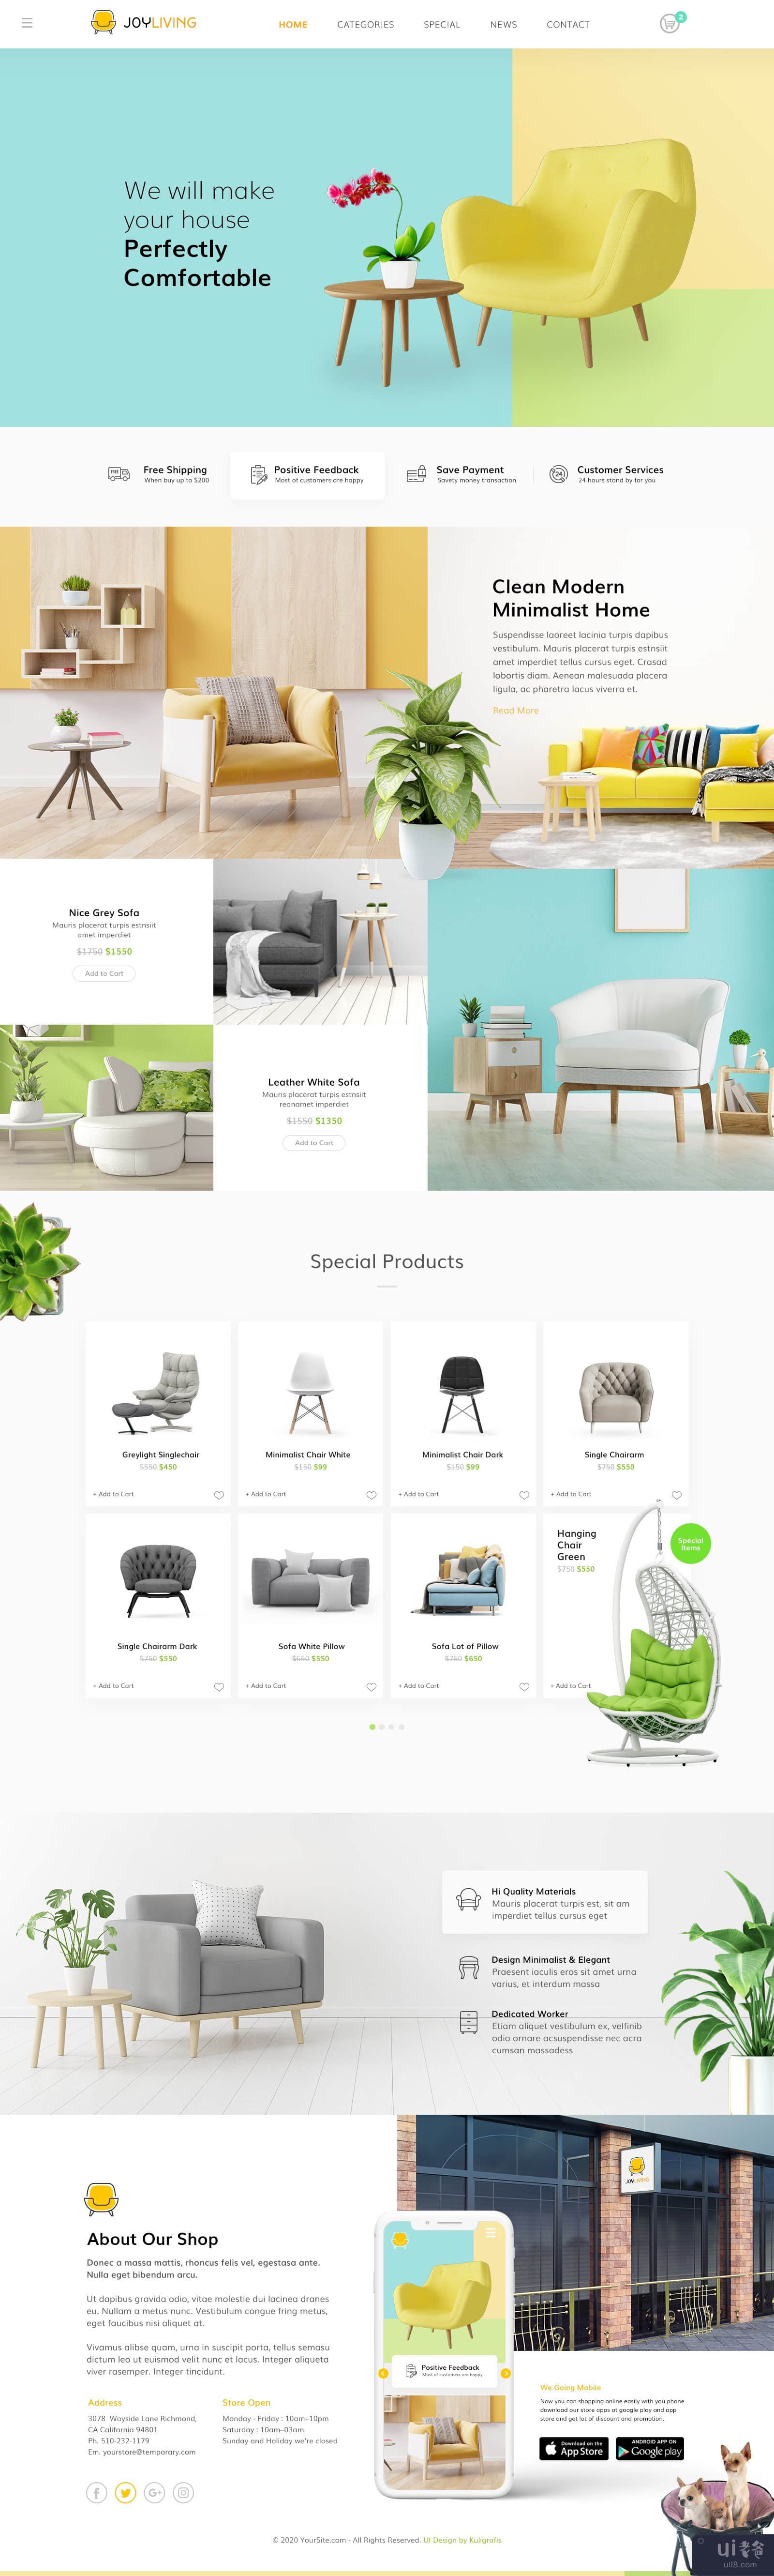 家具网站主题设计(Furniture Website Theme Design)插图